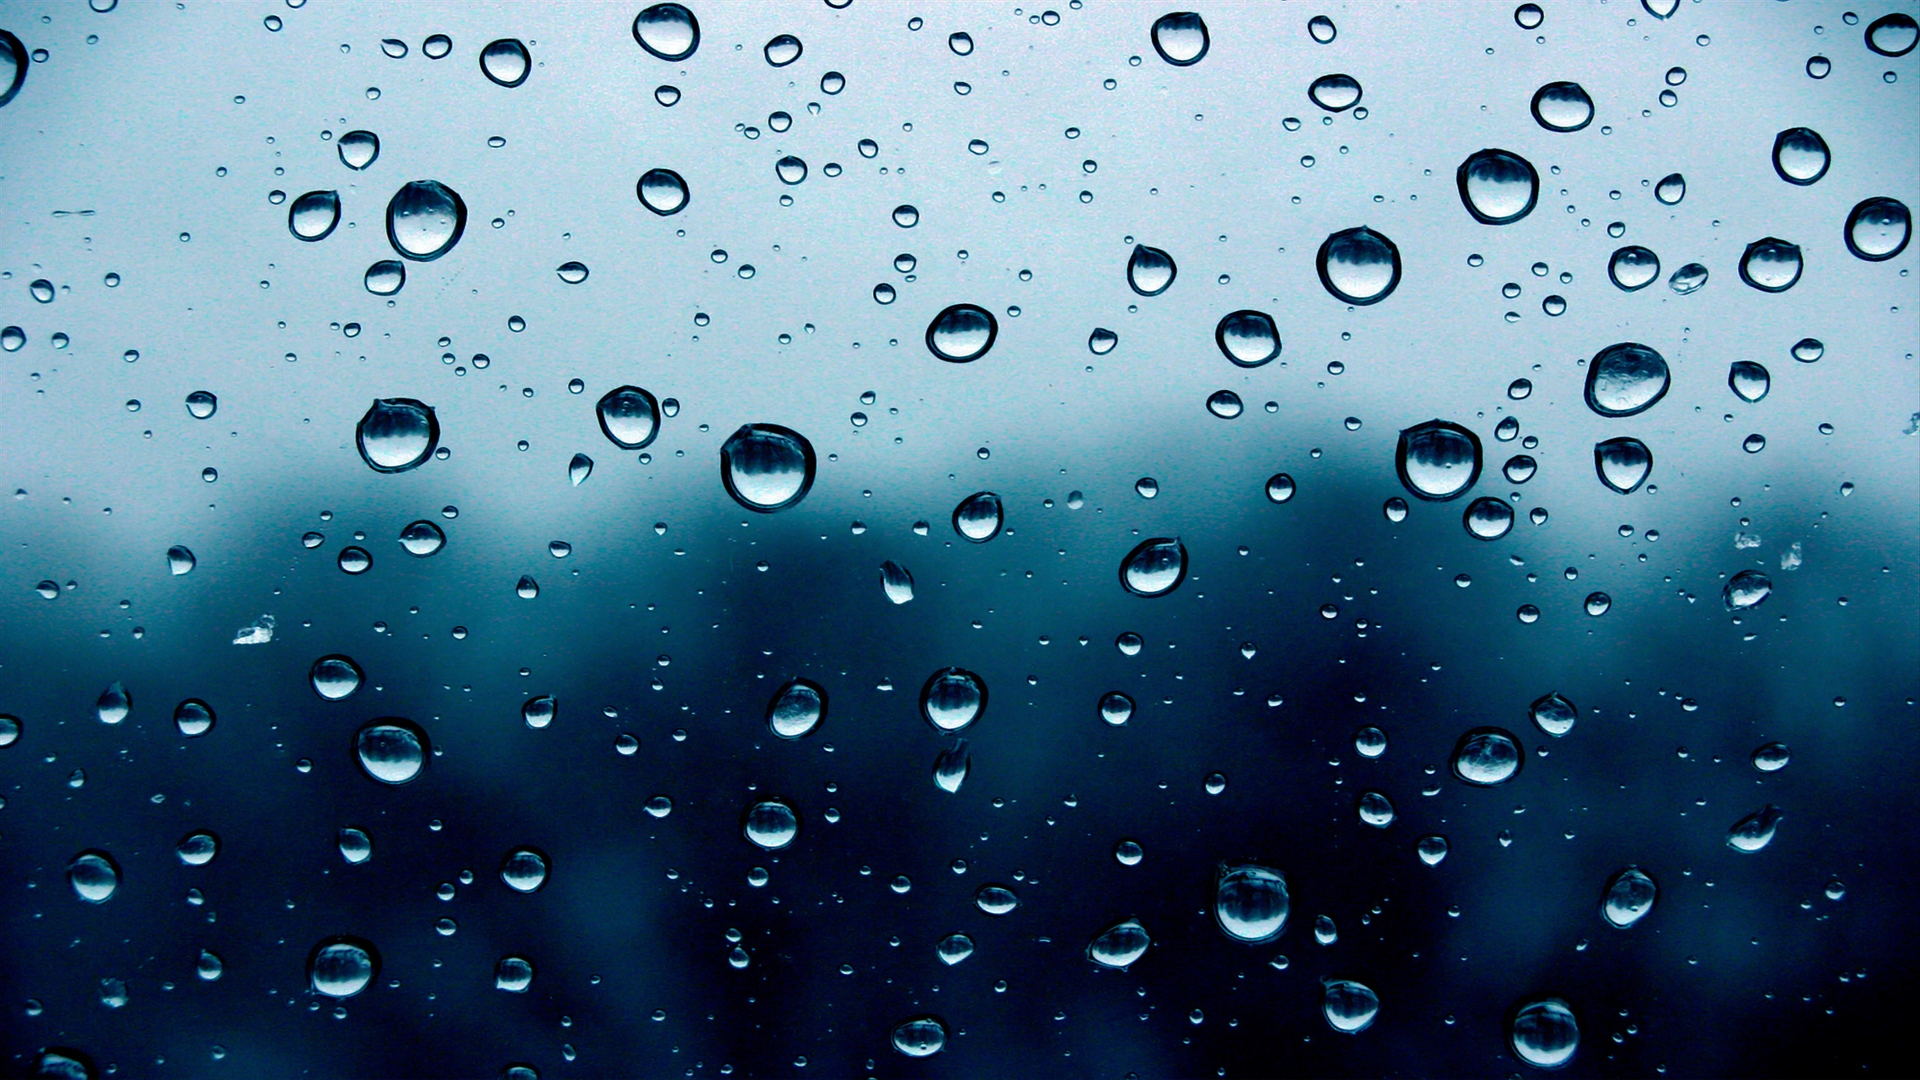 Rain Wallpaper iPhone Imagebank Biz